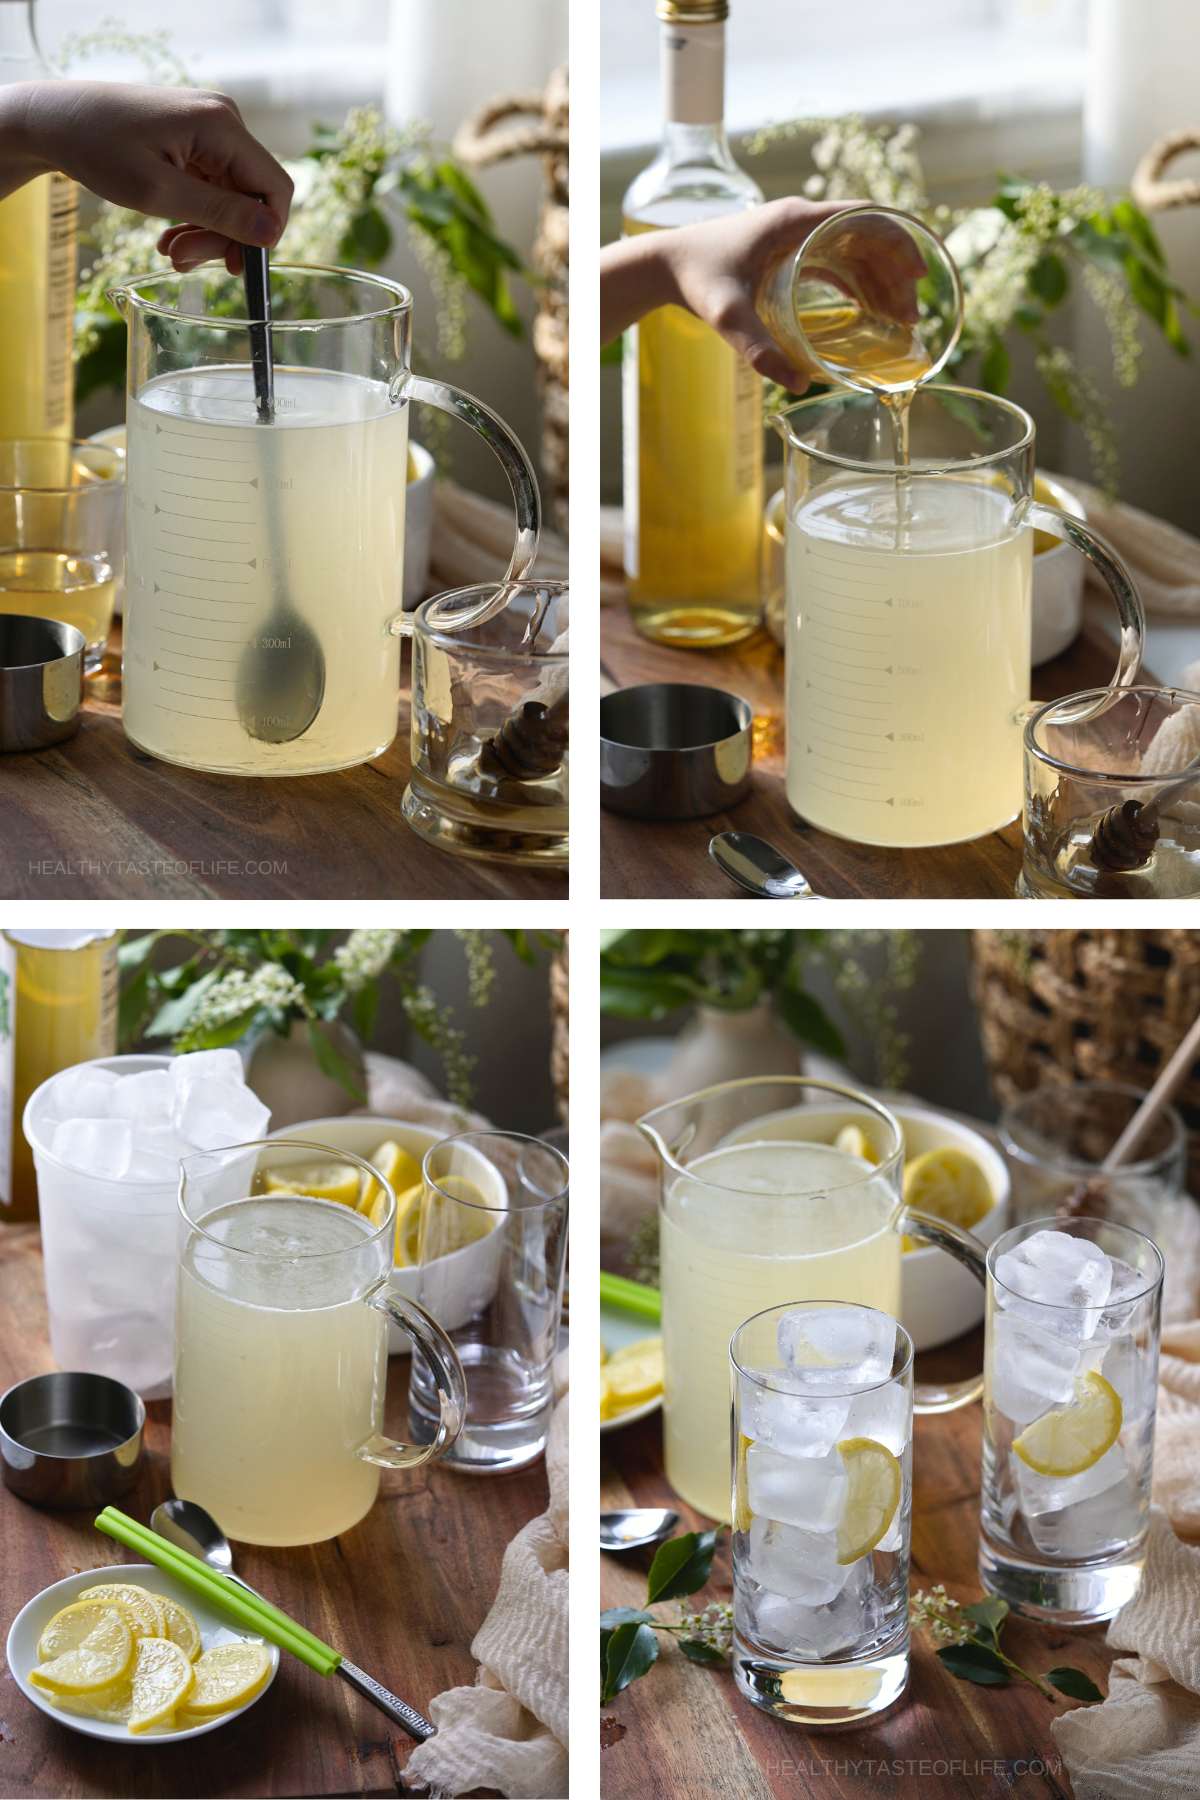 Step-by-step photos showing hot to make an elderflower lemonade.